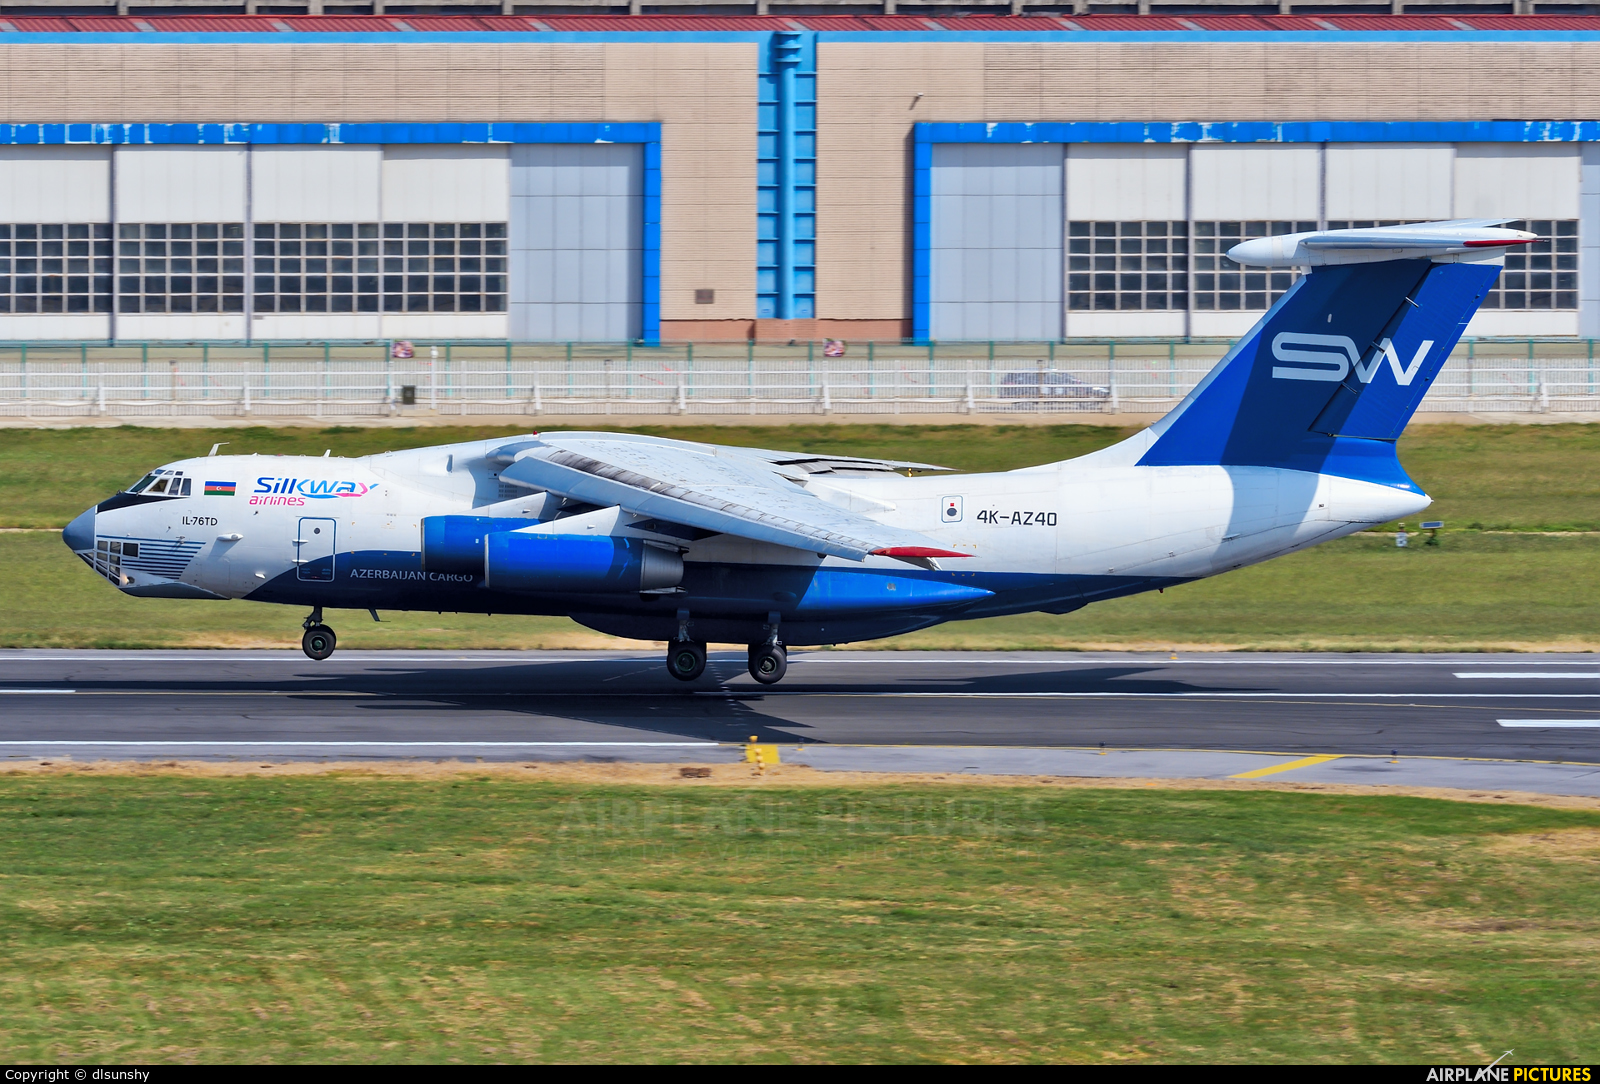 Silk Way Airlines 4K-AZ40 aircraft at Dalian Zhoushuizi Int'l